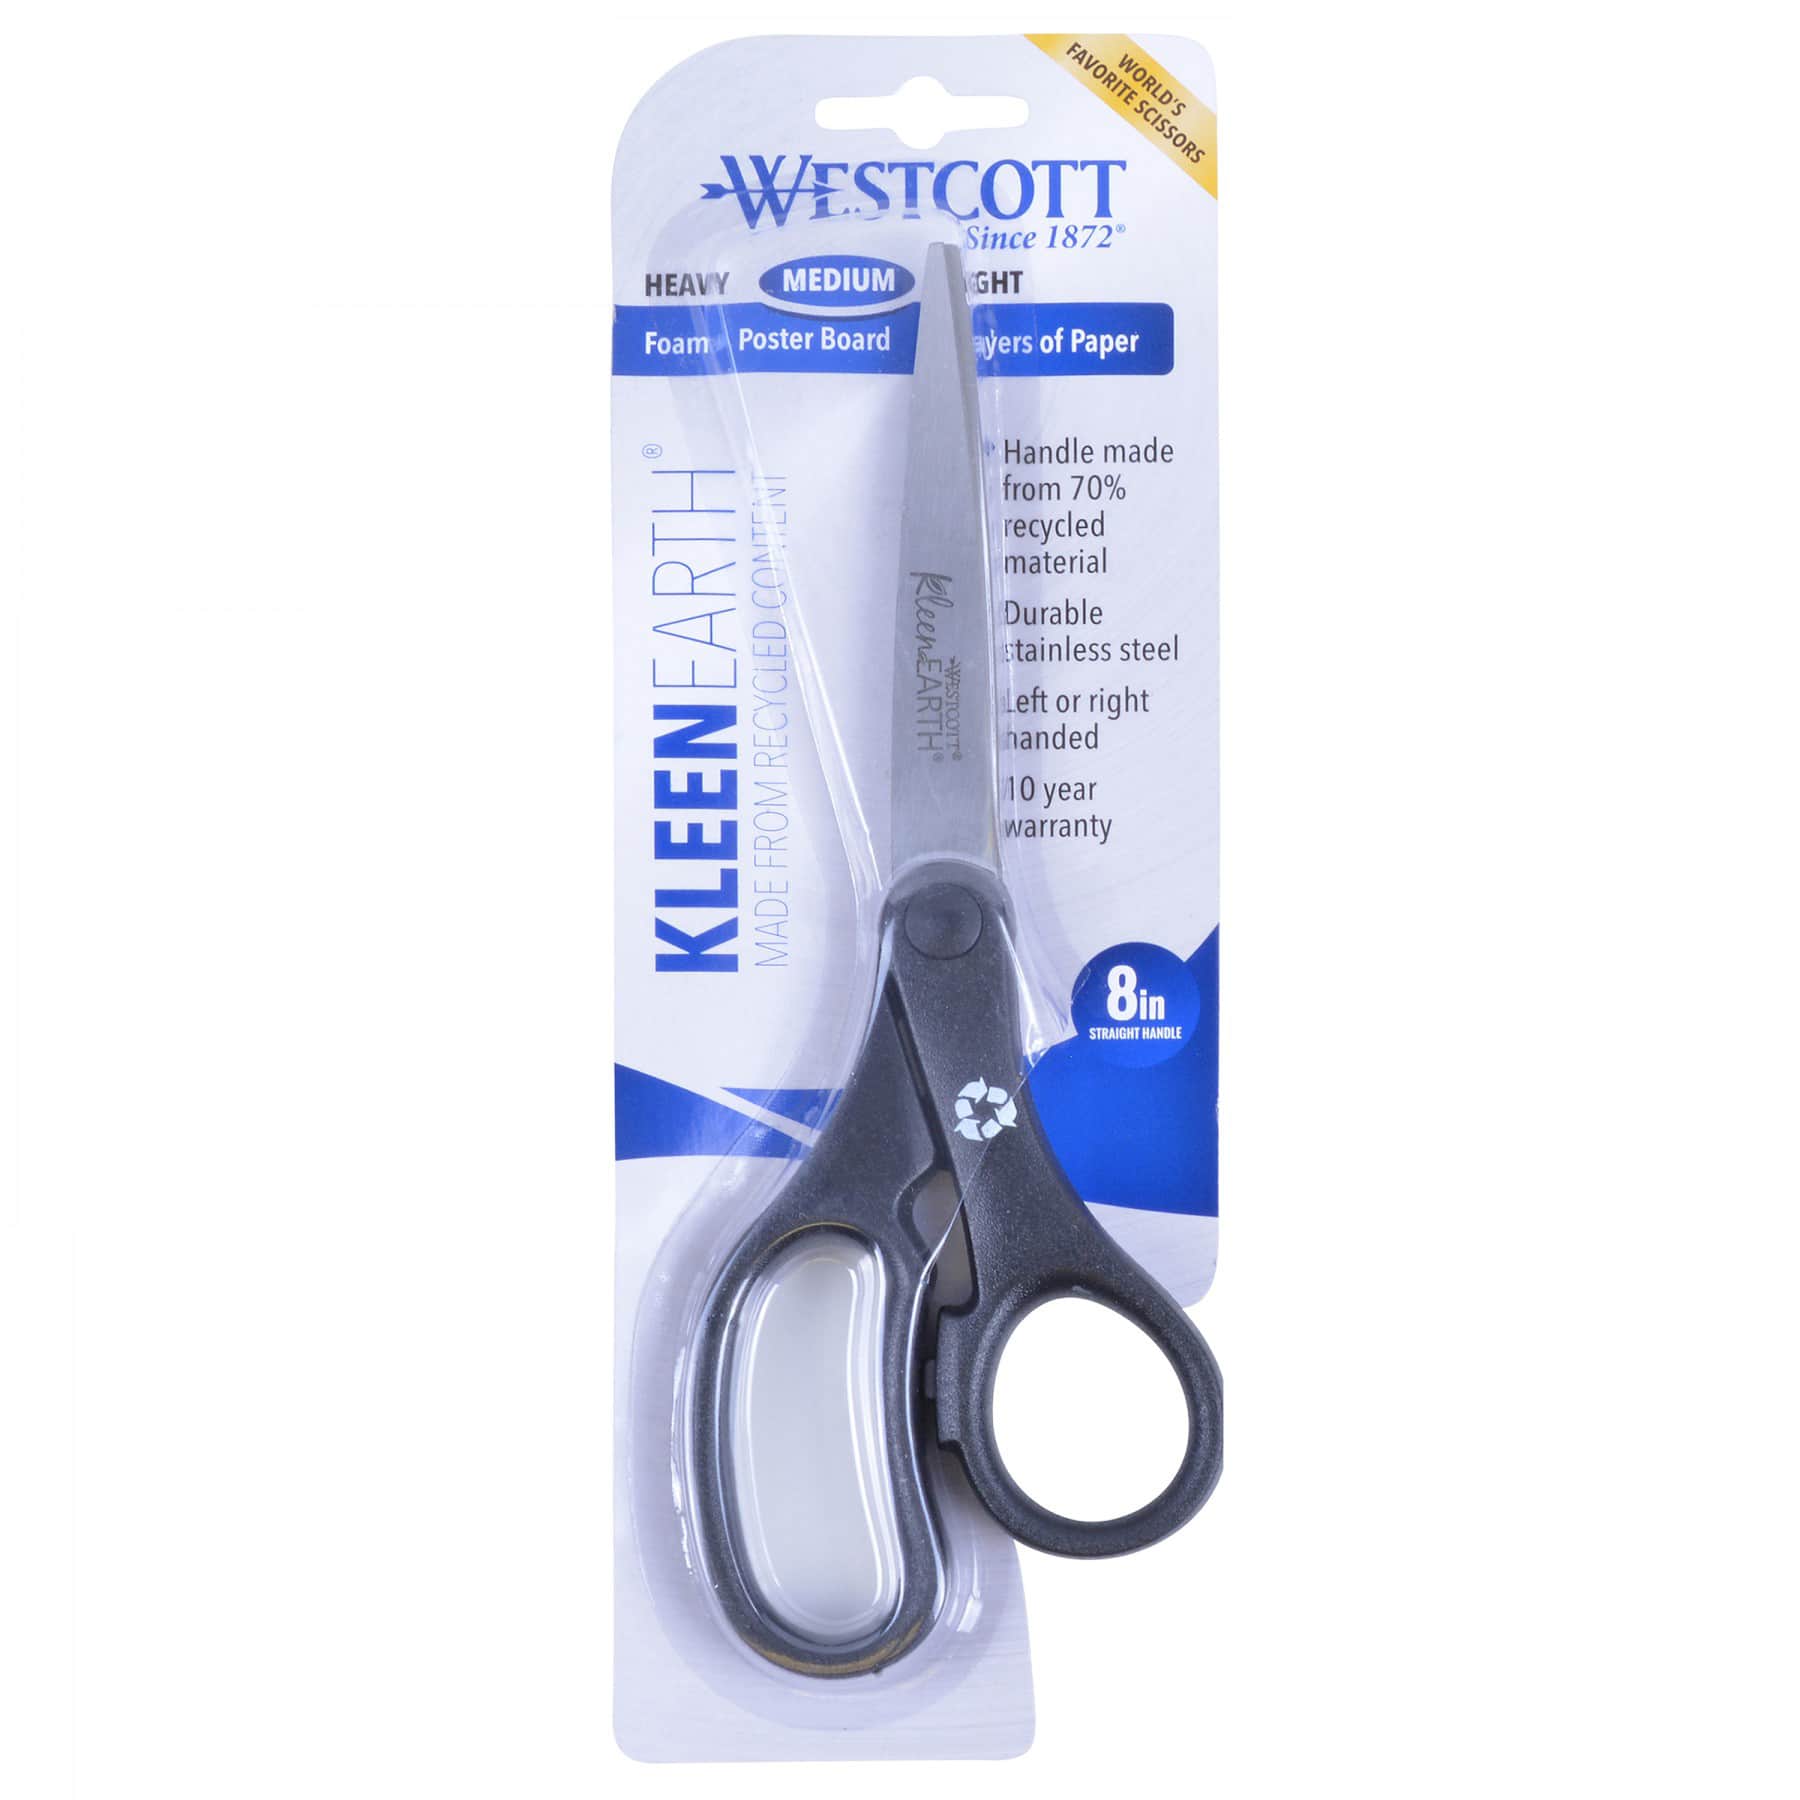 Westcott All Purpose Scissors, 8, Stainless Steel, Straight, for